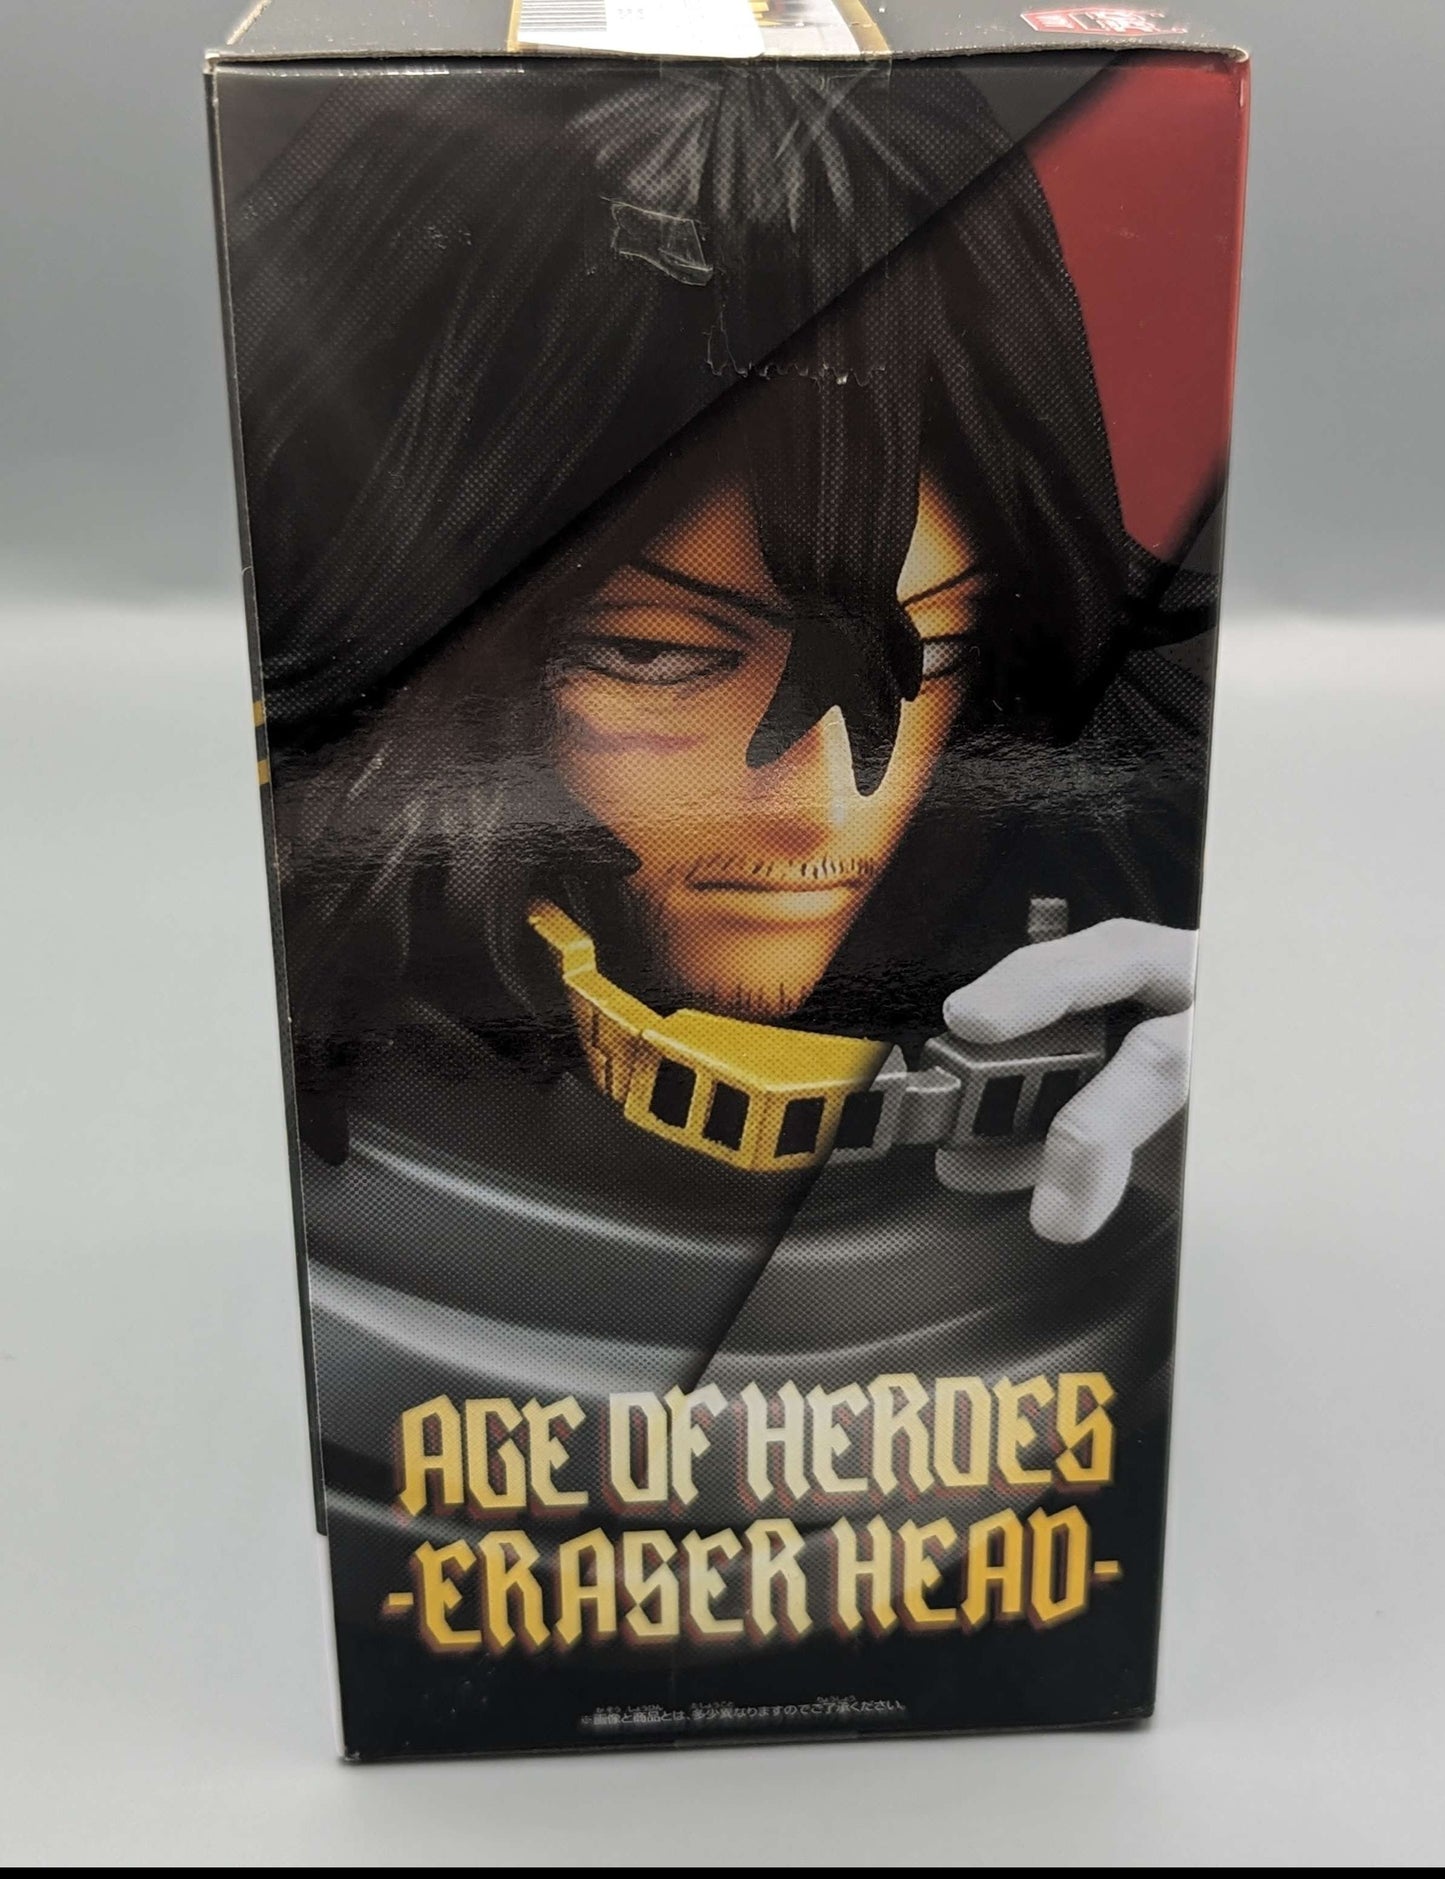 Anime My Hero Academia Banpresto Bandai Eraser Head Shota Aizawa Age of Heroes Figure